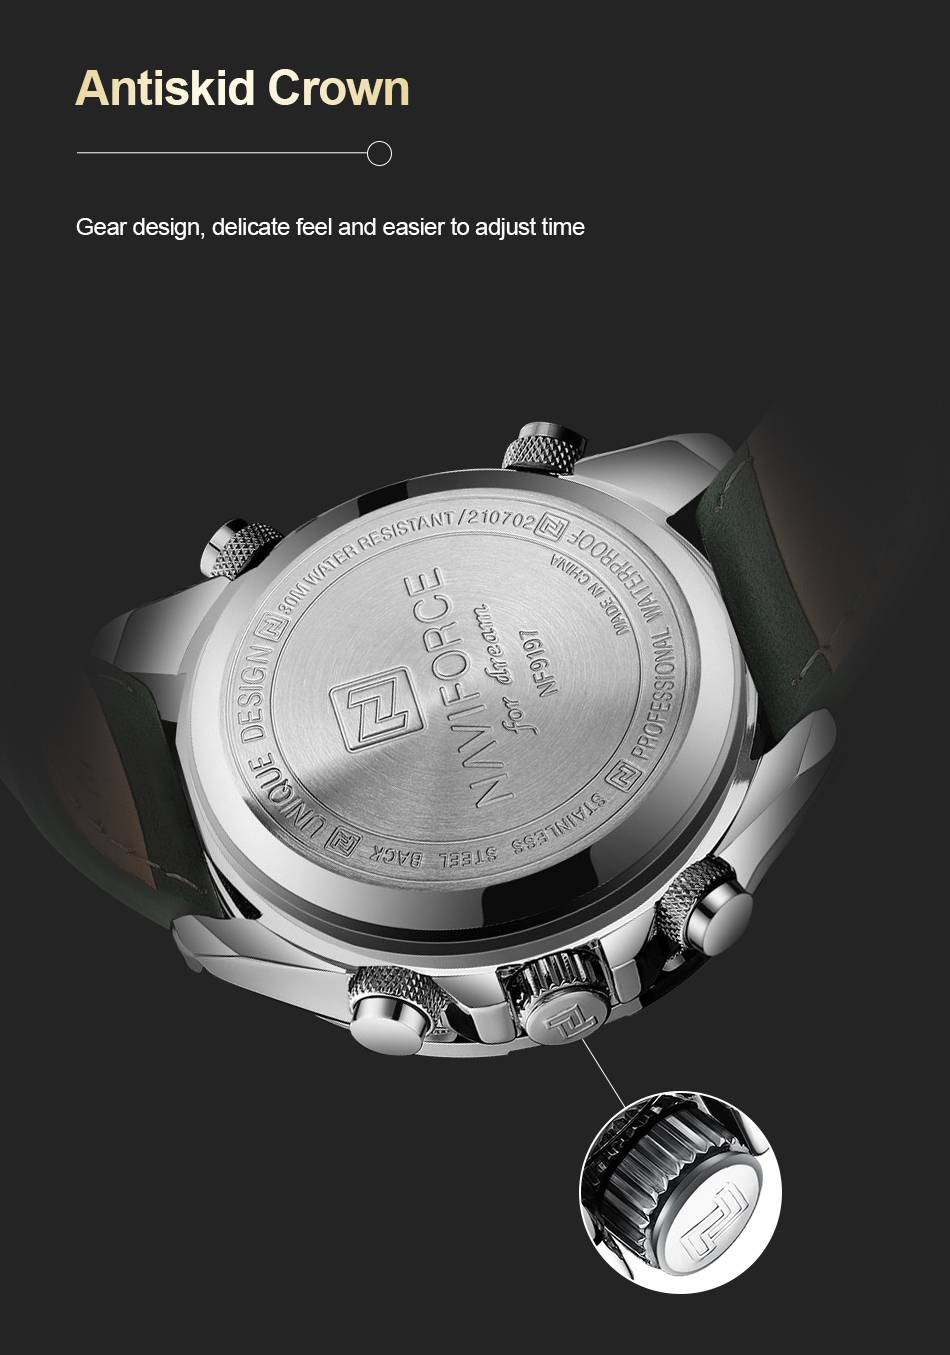 NAVIFORCE Men's Leather Watches Casual Fashion Waterproof Led Digital Week Display Calendar Clock Watches Male Relogio Masculino